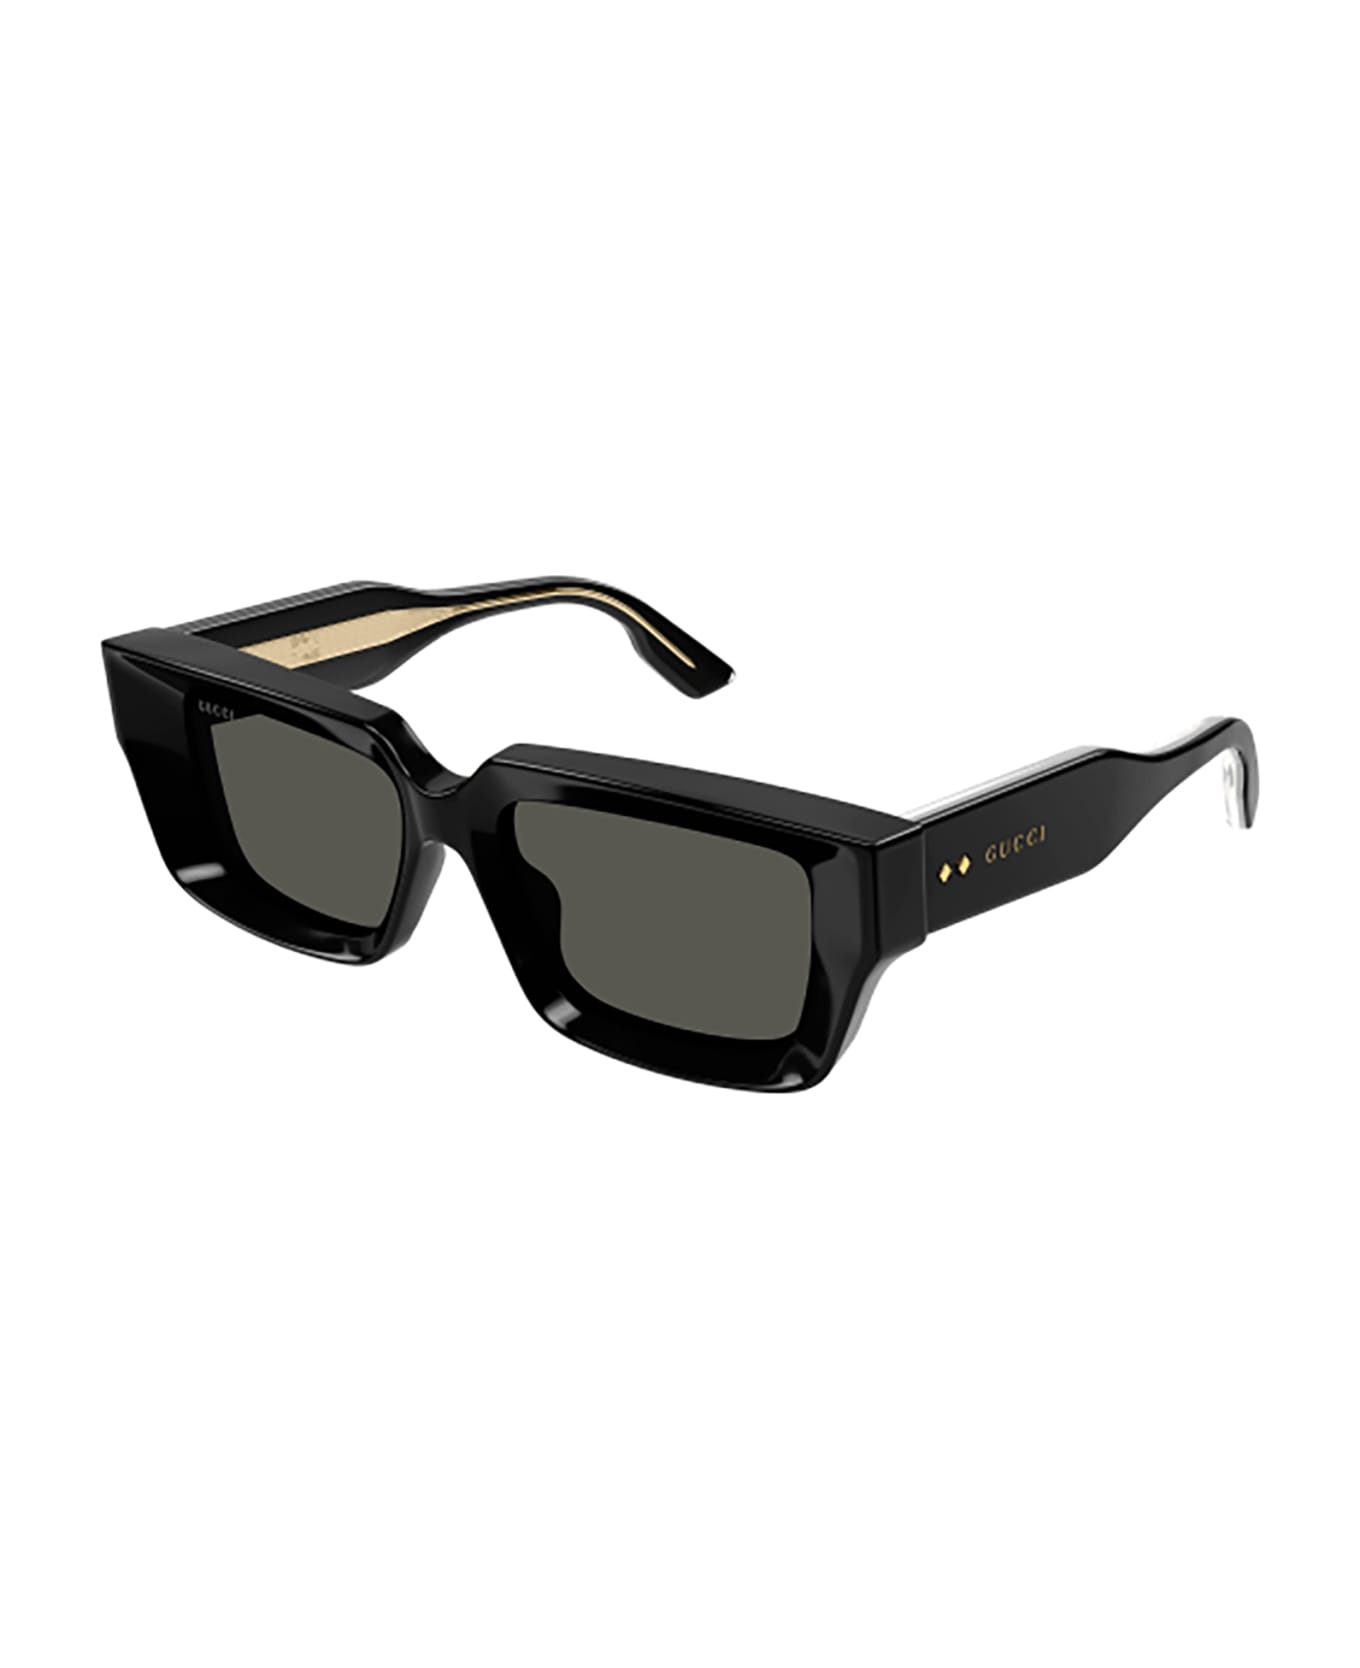 Gucci Eyewear GG1529S Sunglasses - Gigi Hadid TH GIGI HADID4 003 99 Women Sunglasses Yellow Lens